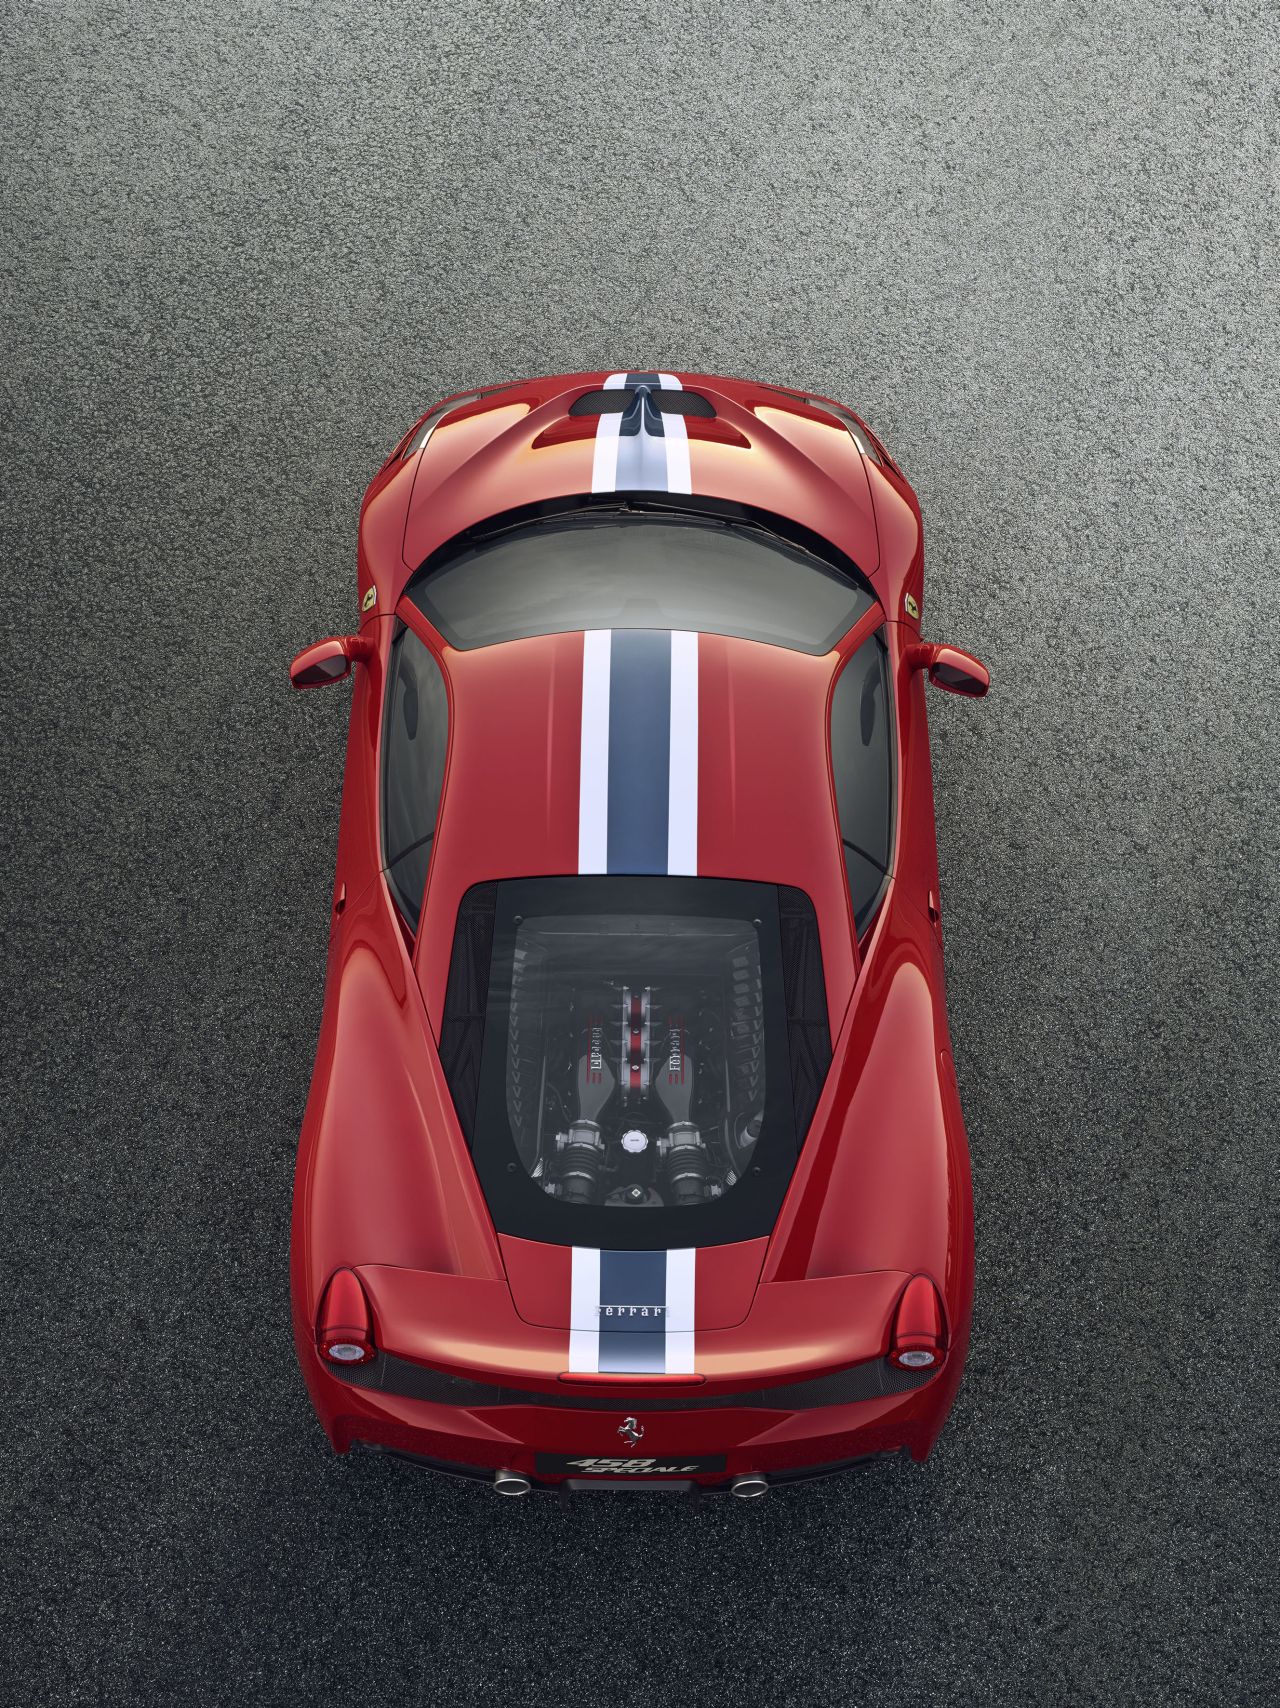 Ferrari-458-Speciale-04.jpg